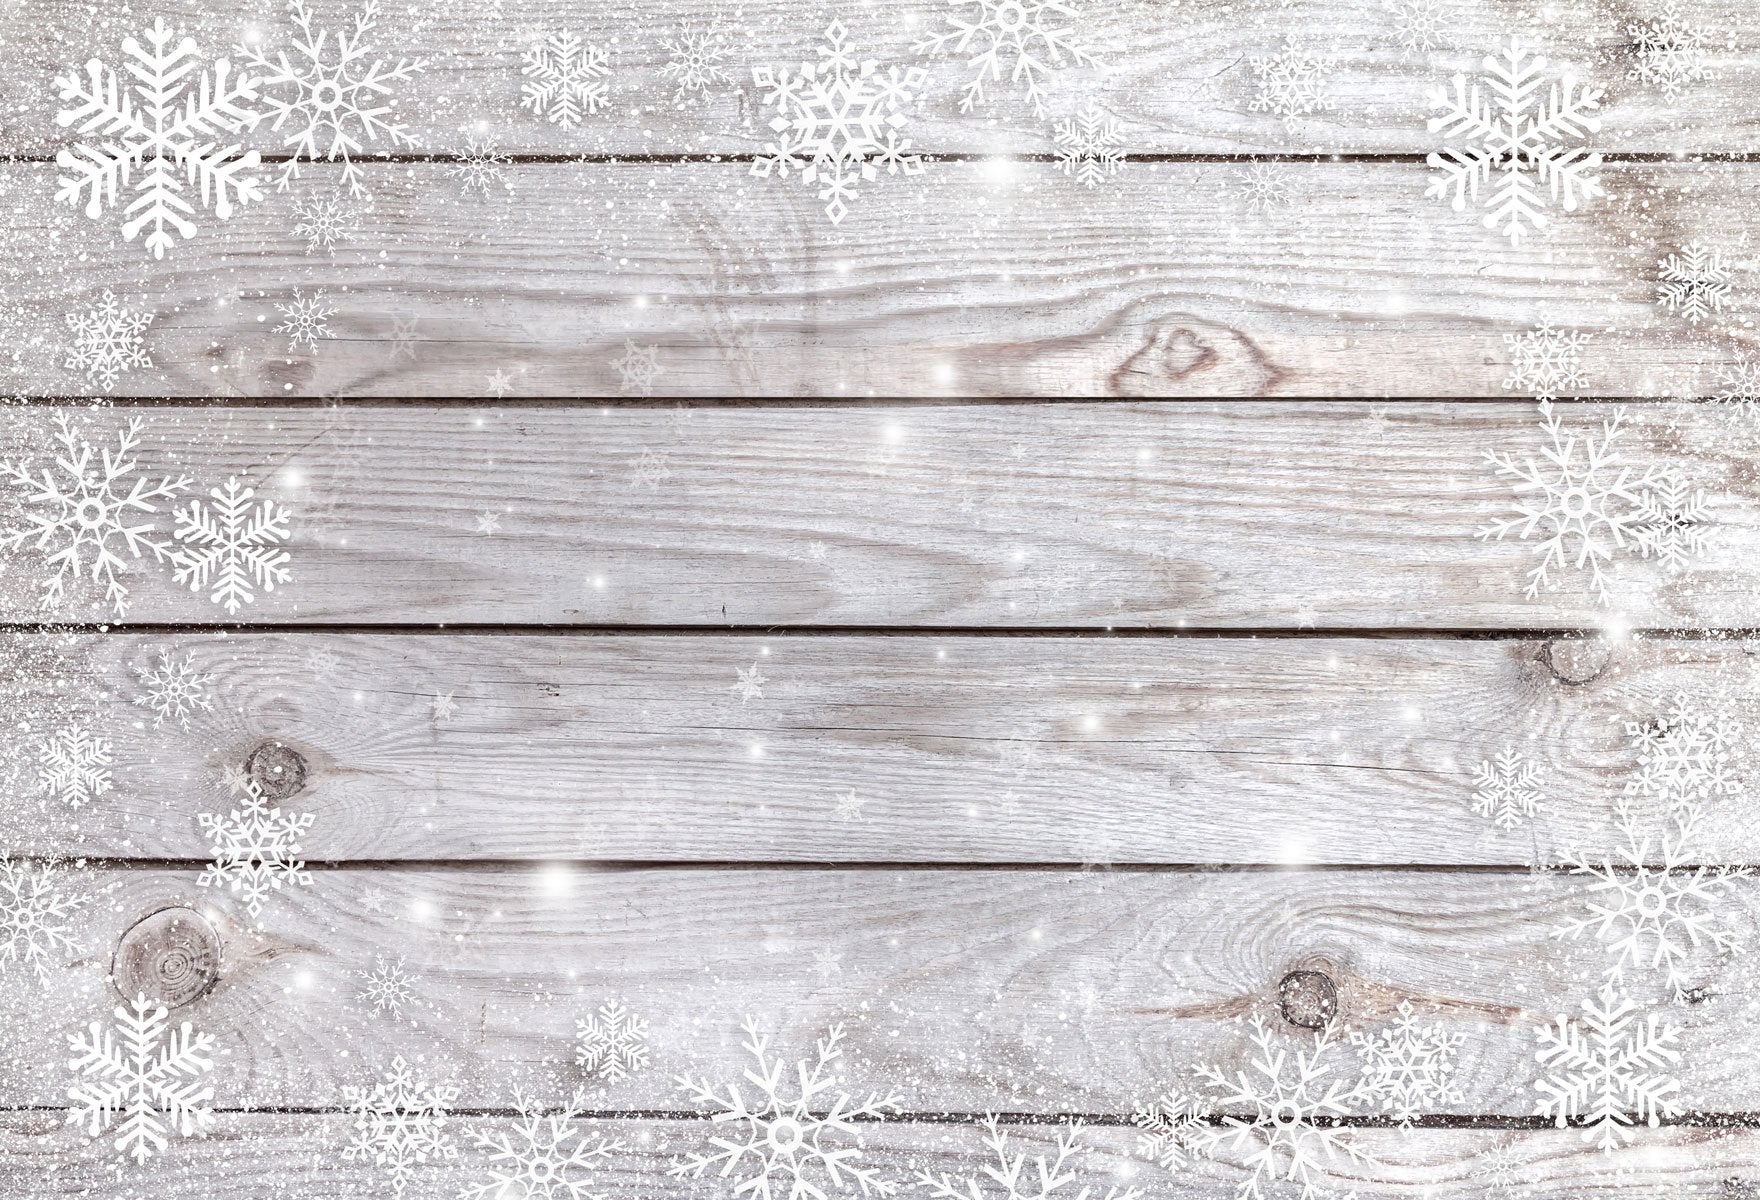 Kate Christmas Winter Snowflake Wood Floor Backdrops für Fotografie